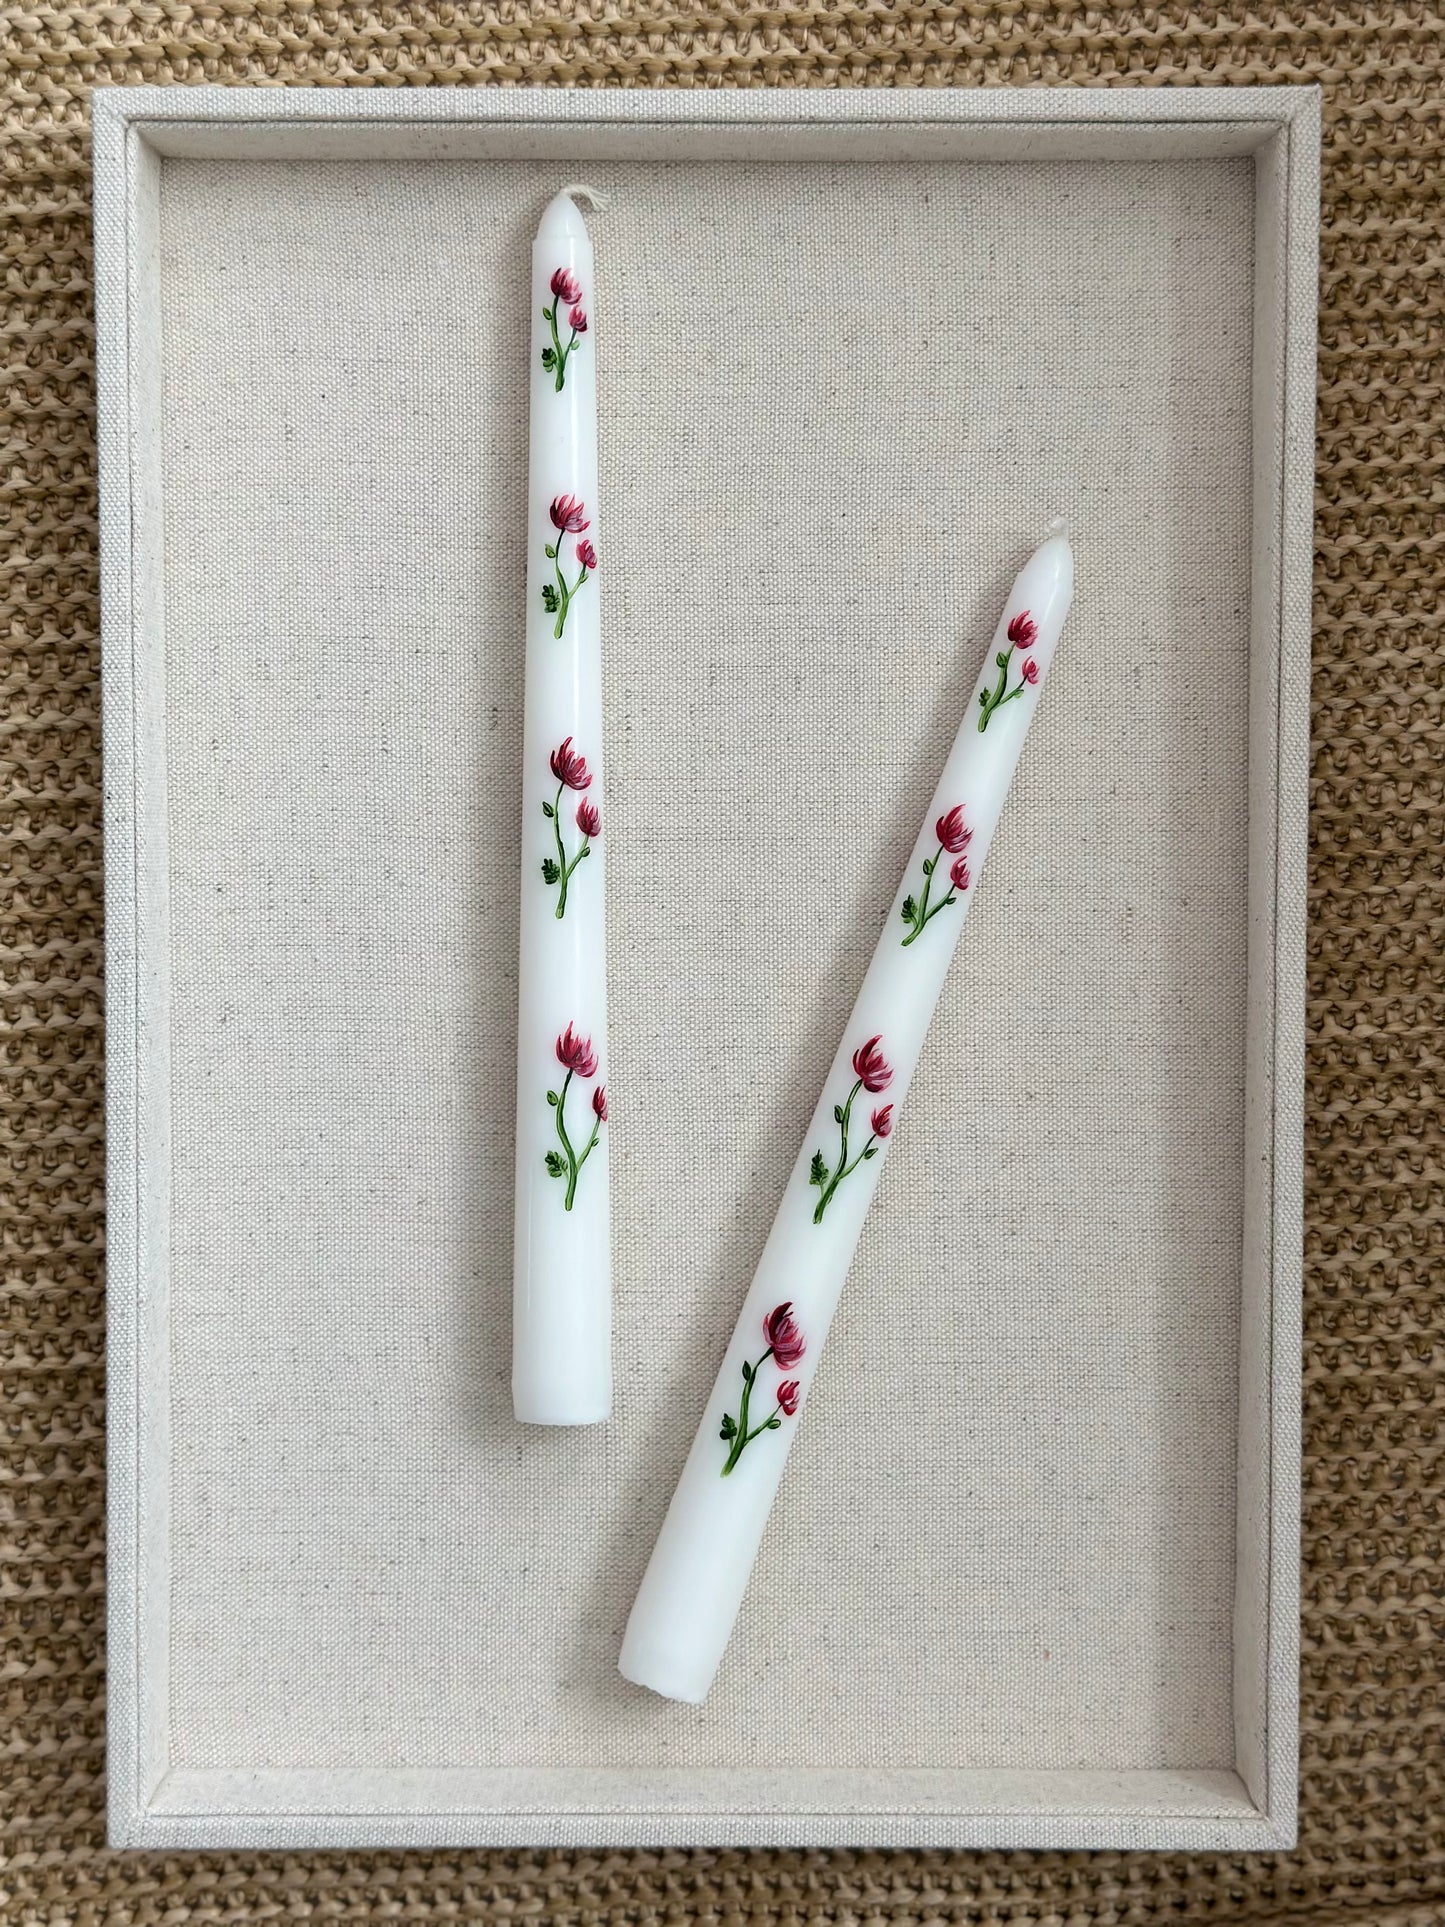 birth month flower hand-painted candlesticks